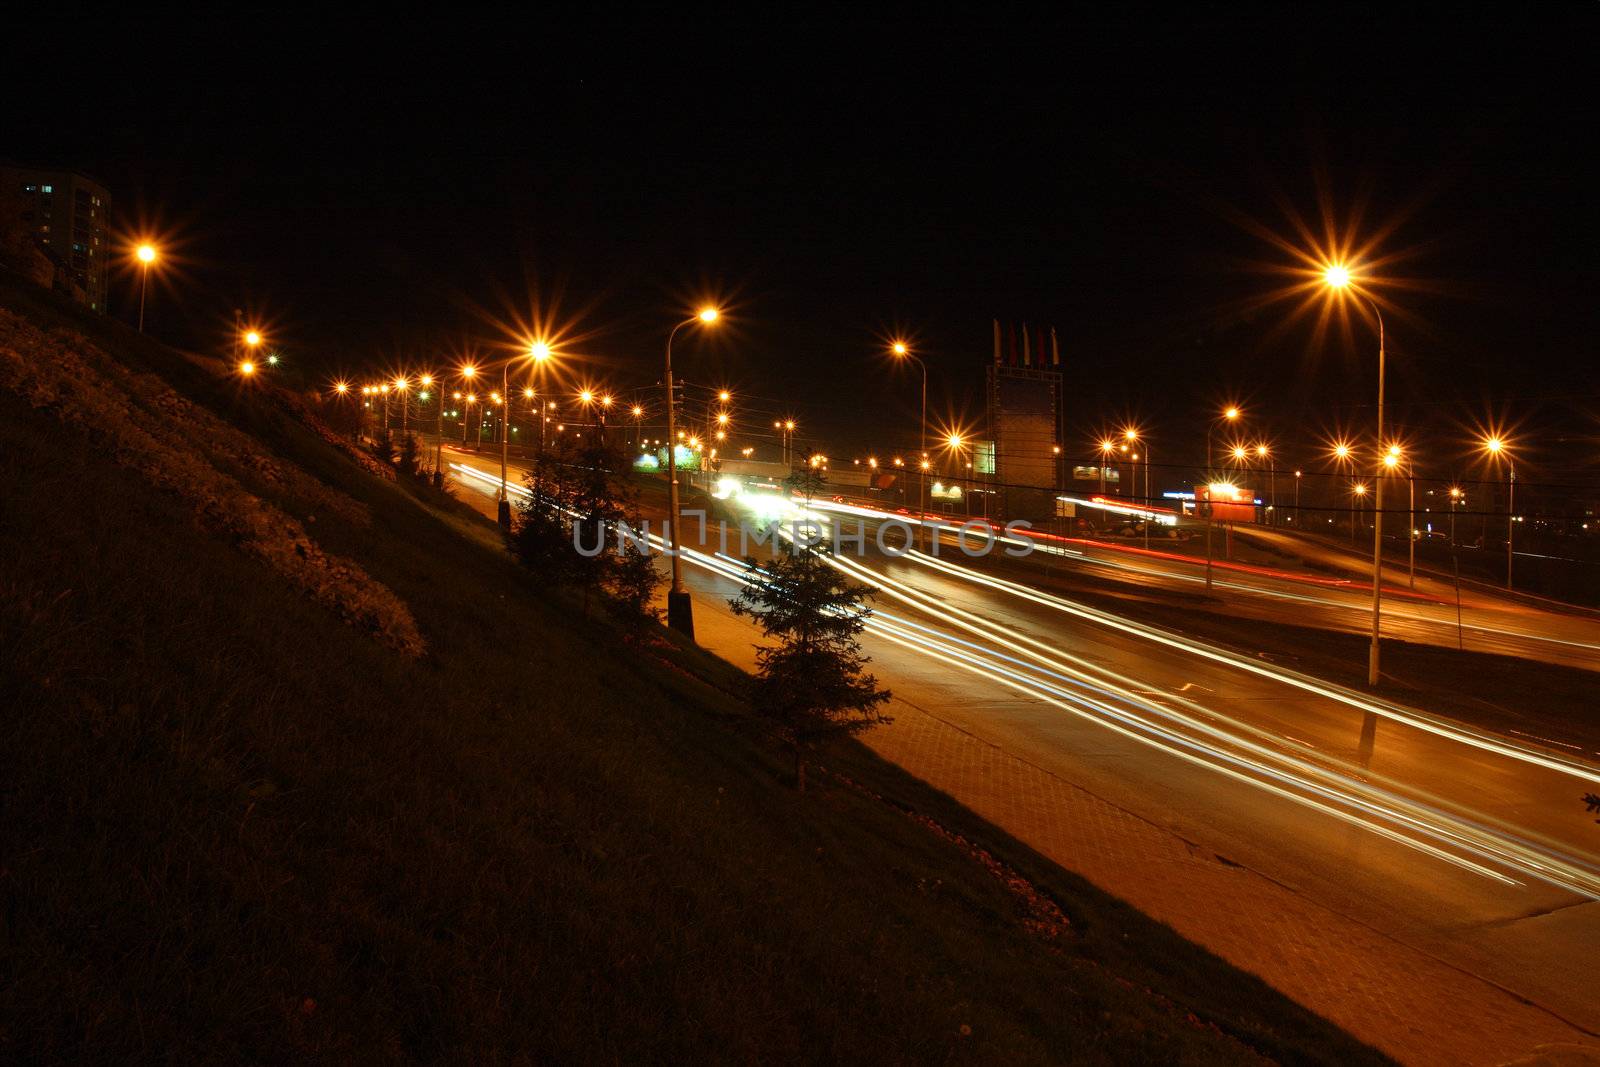 traffic on night roads by Mikko